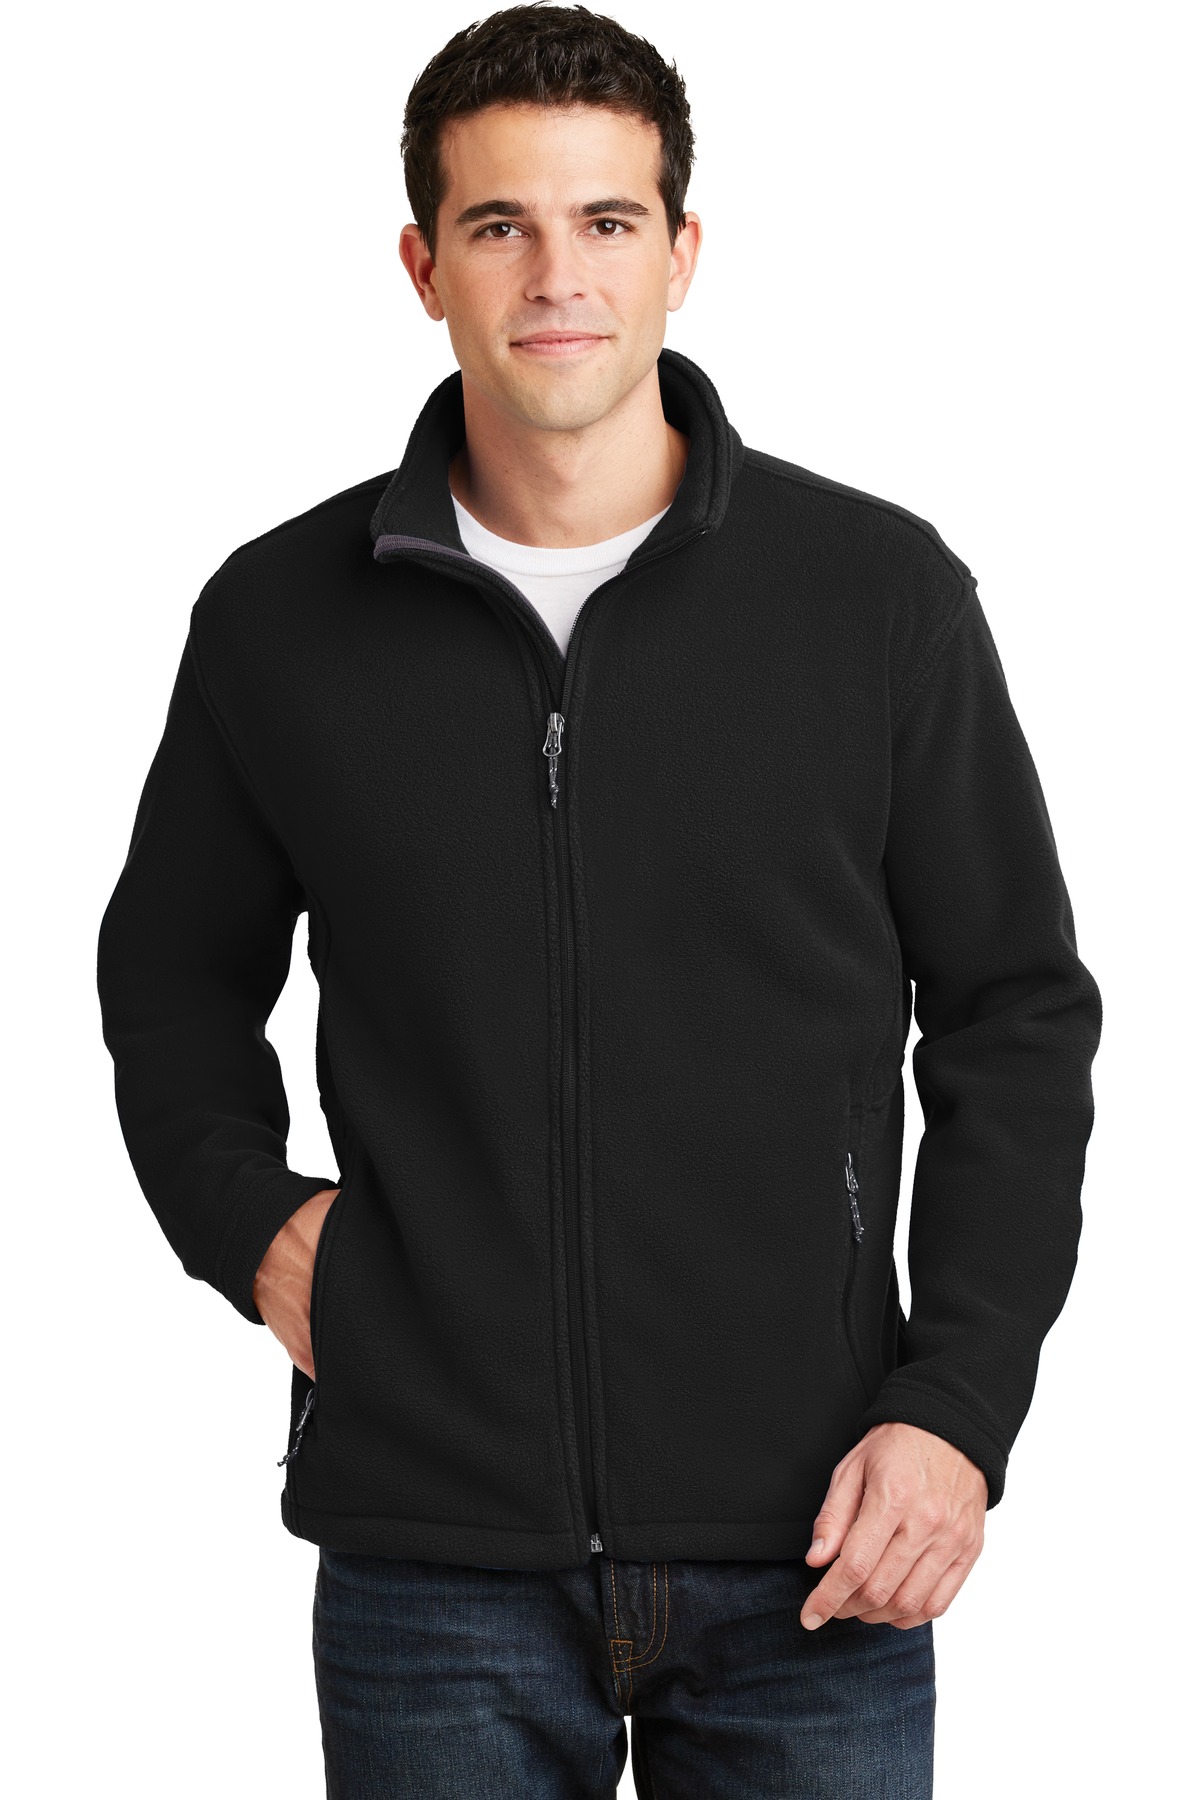 Buy Port Authority® Value Fleece Jacket. - Port & Company Online at ...